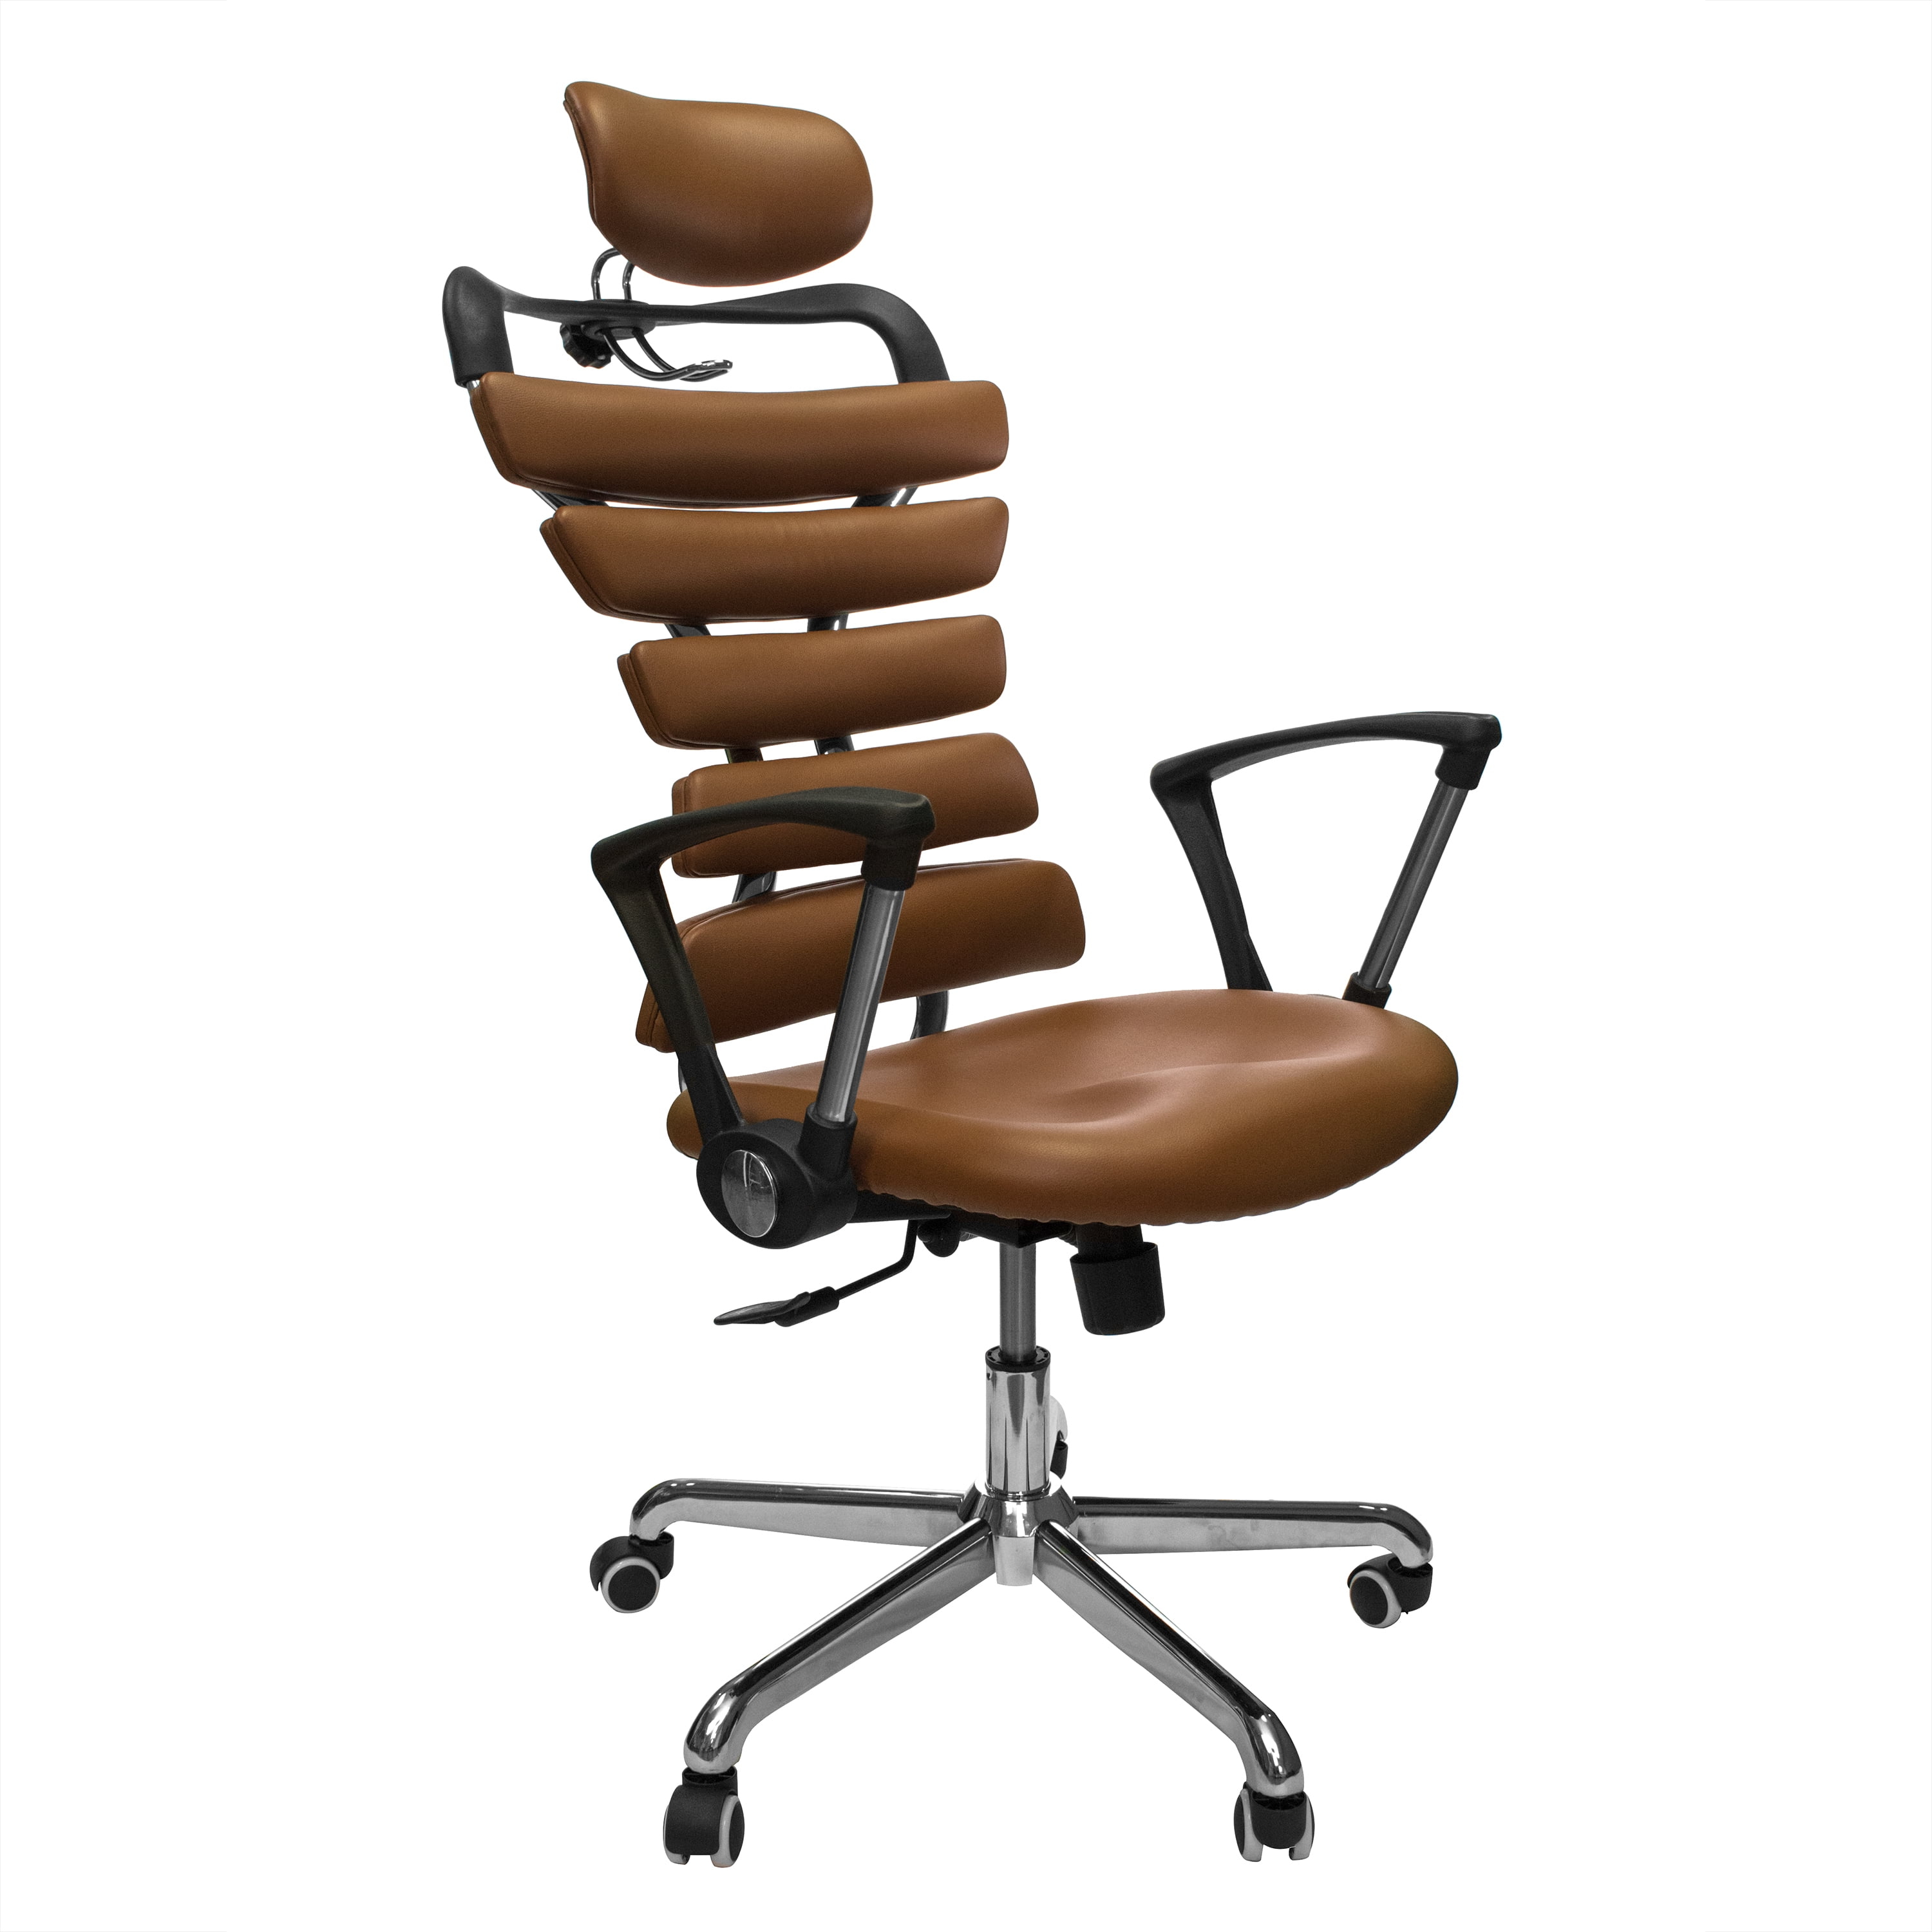 Constructor Studio Soho Brown PU Leather Ergonomic Office Chair Full